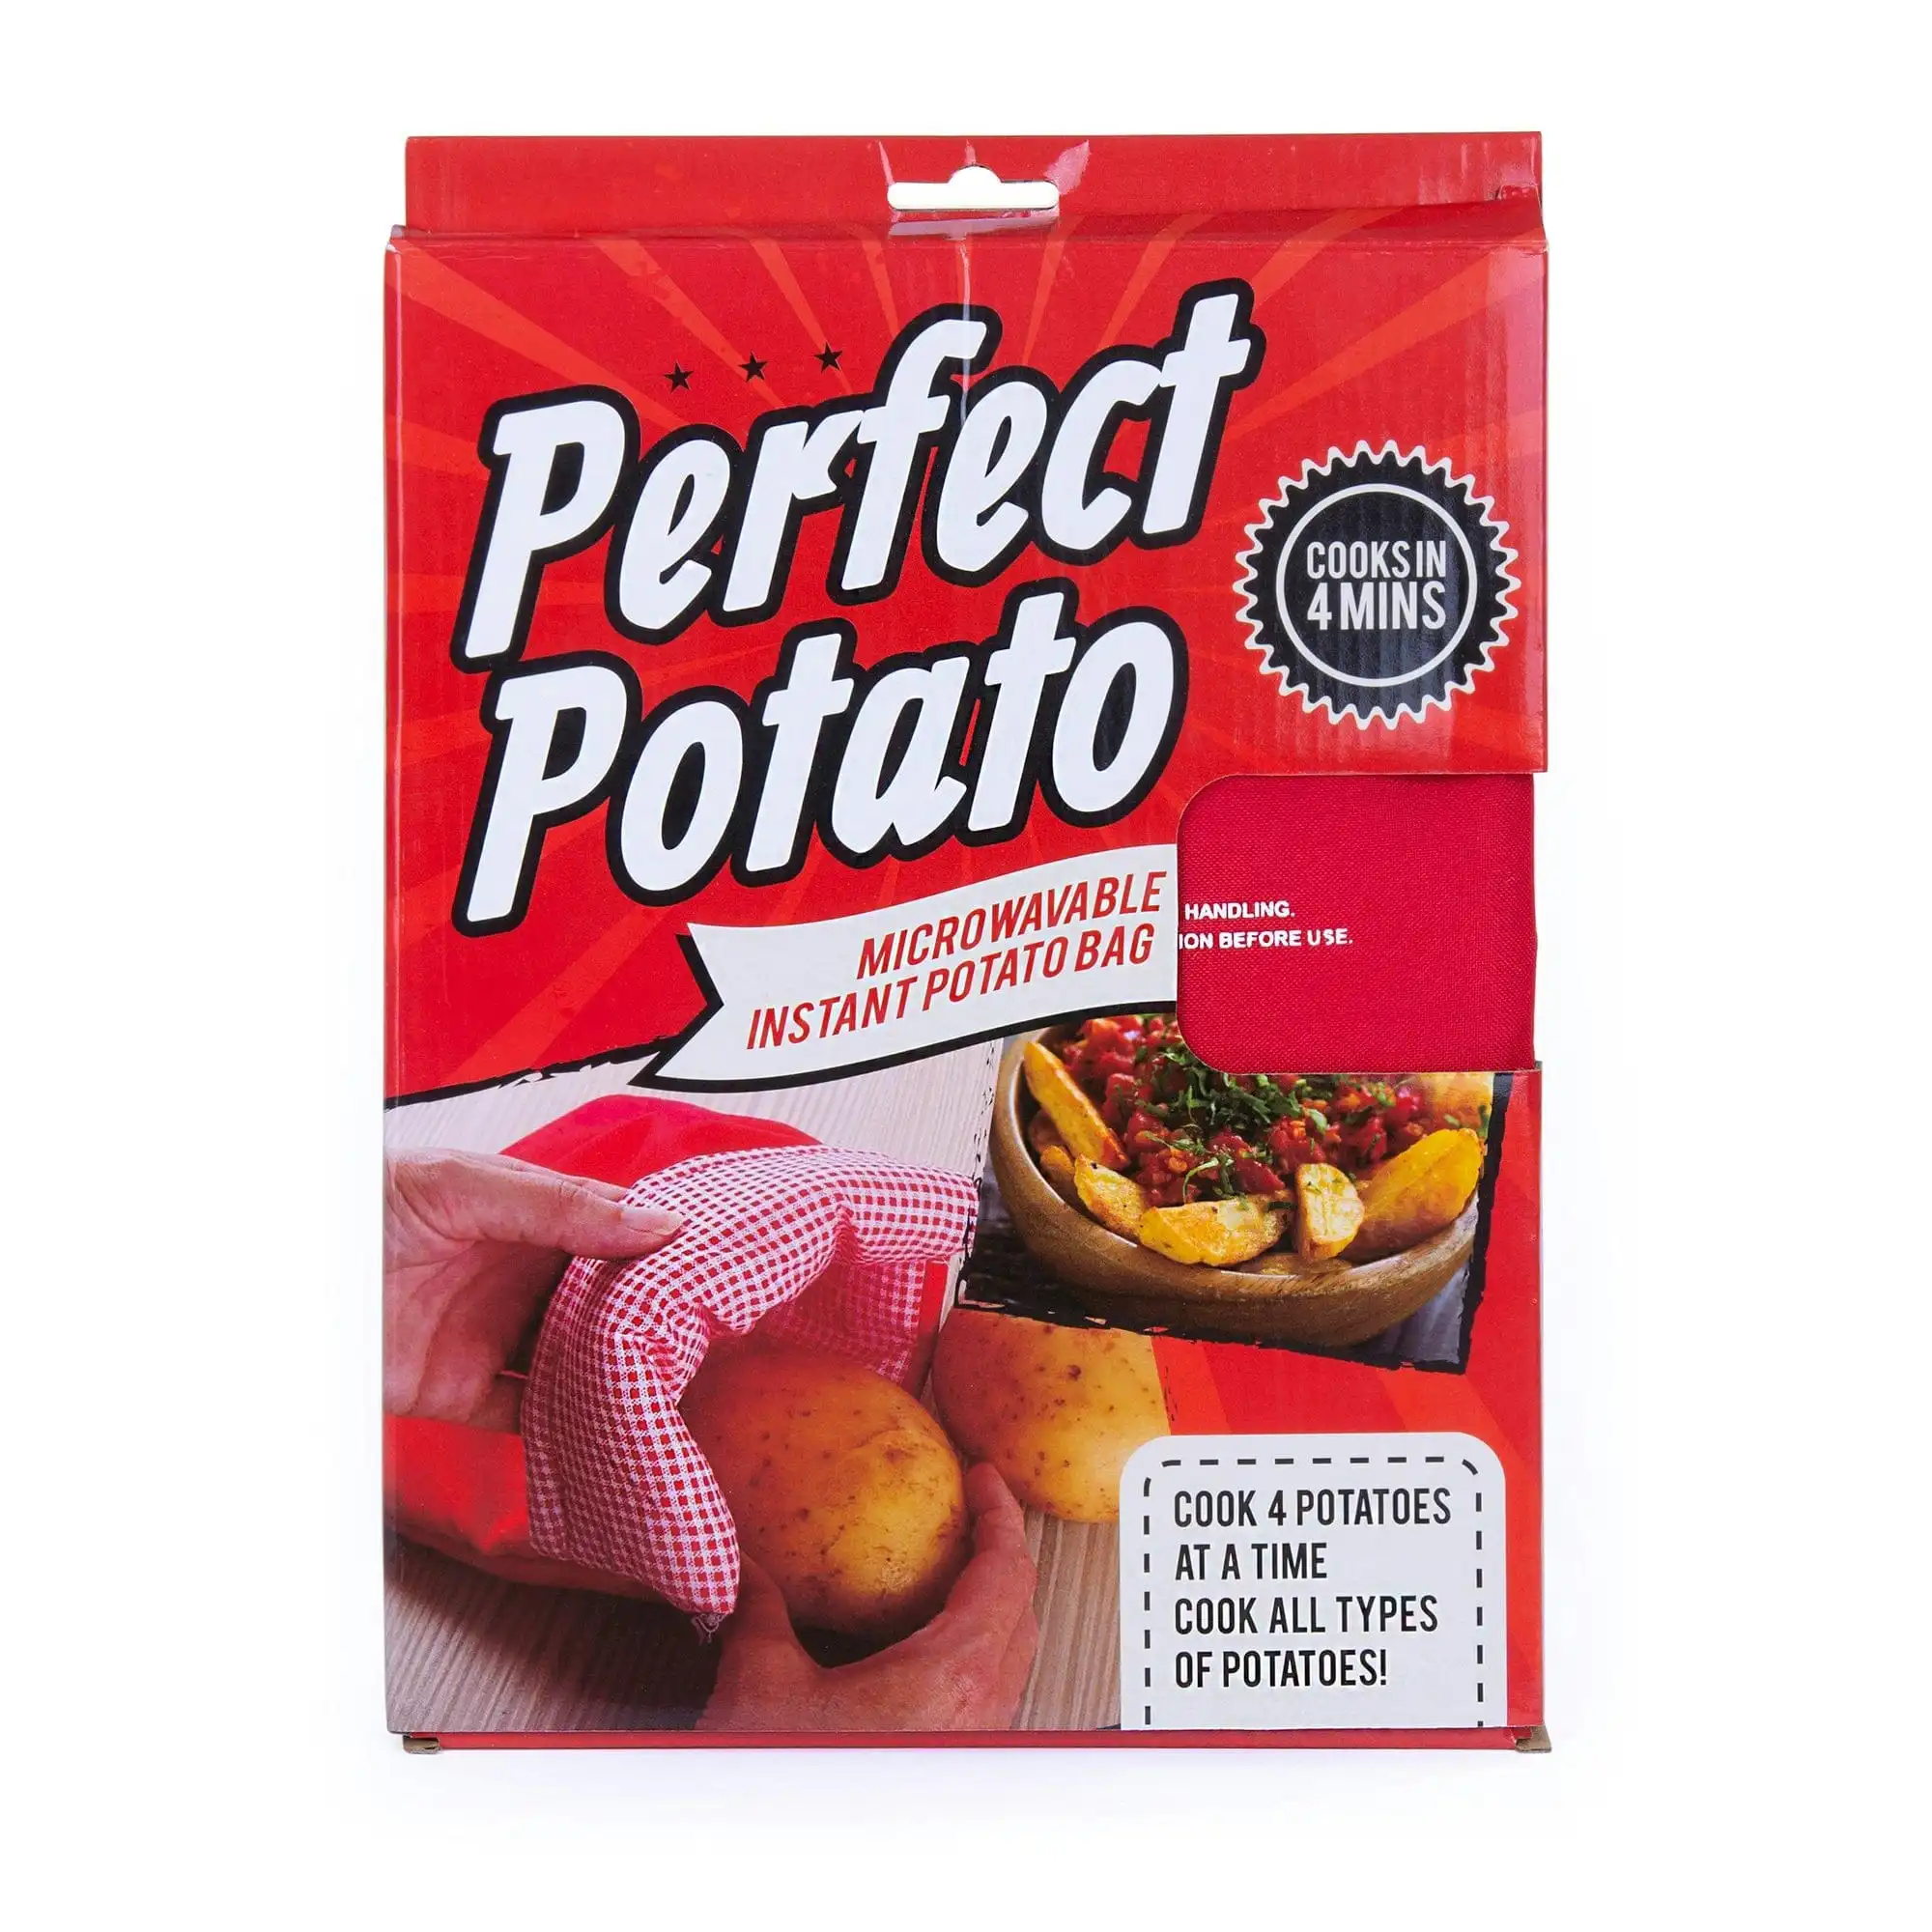 Perfect Potato, Microwavable Instant Potato Bag